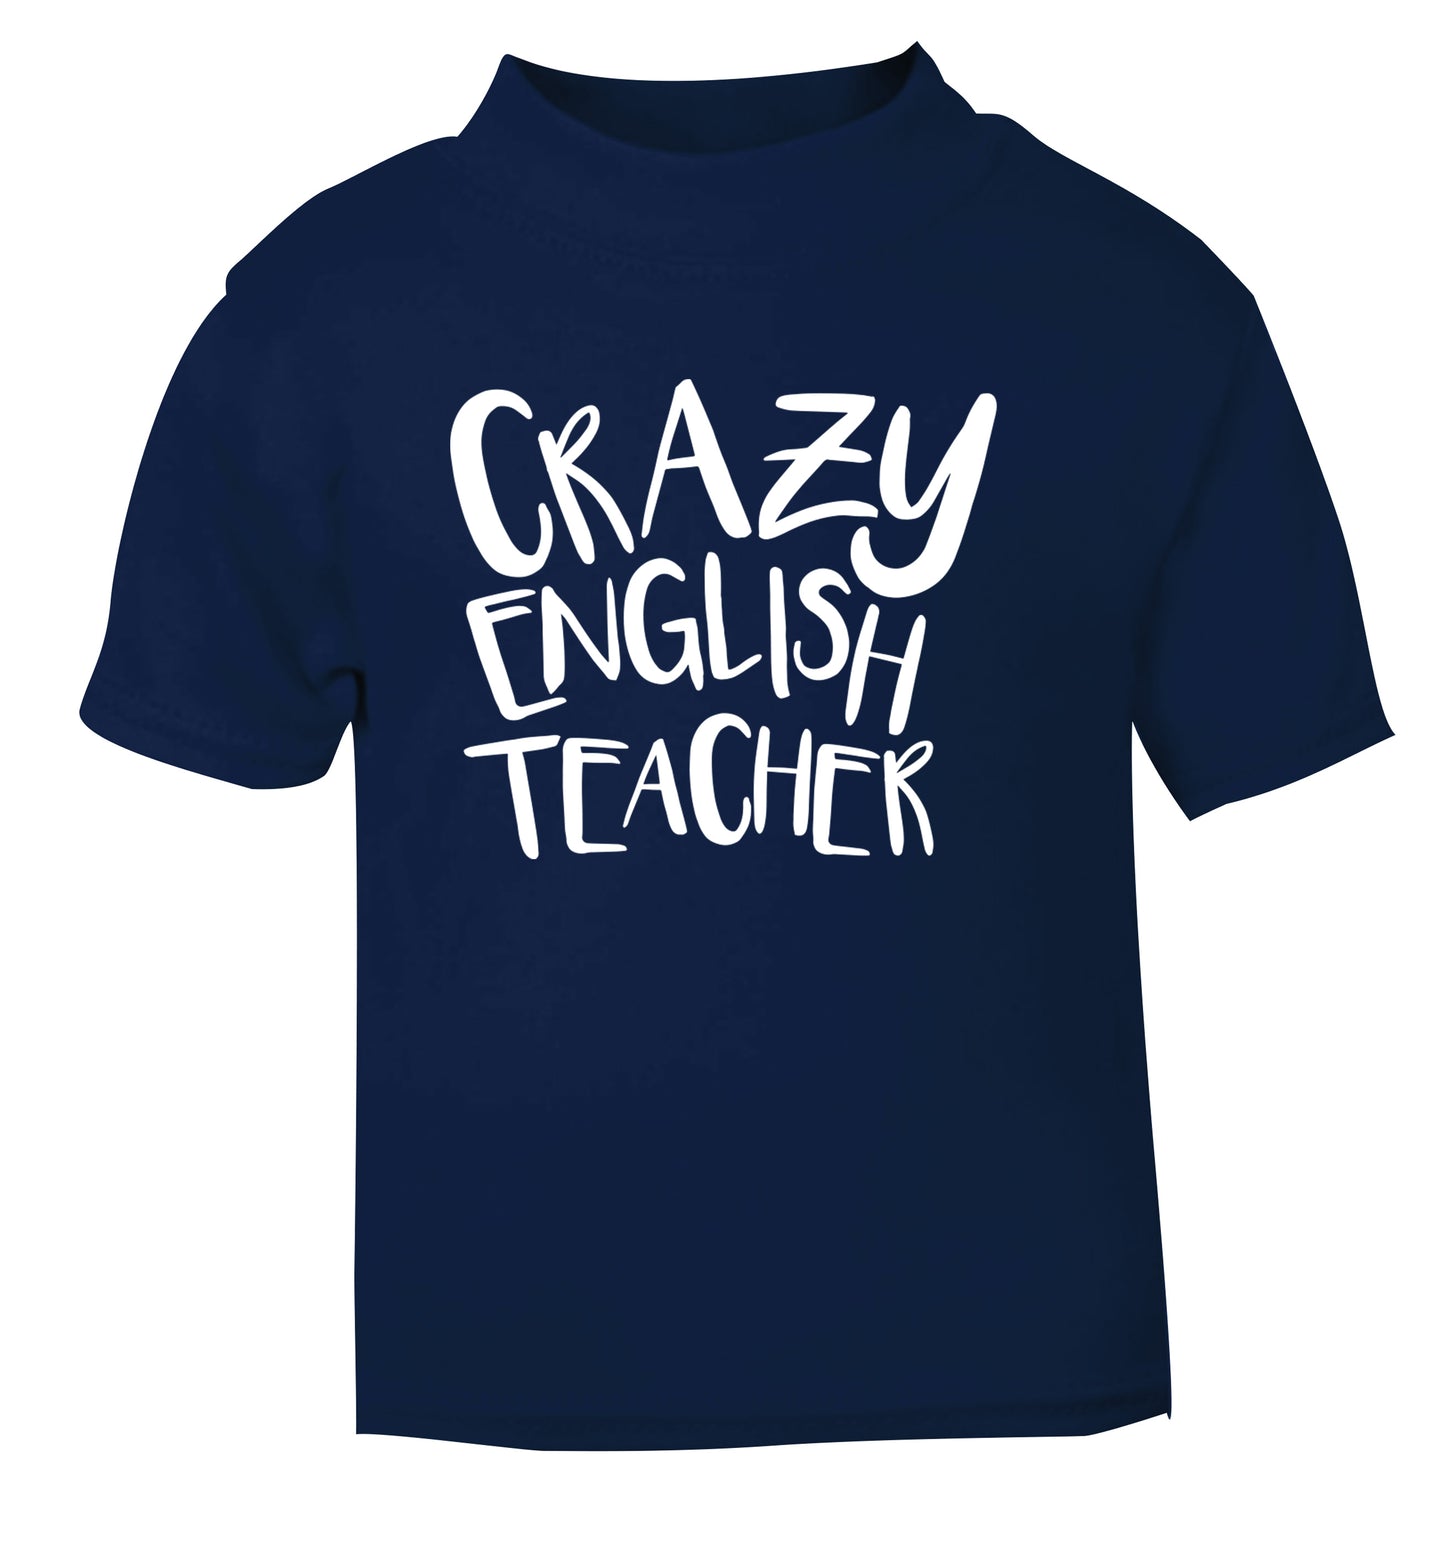 Crazy English Teacher navy Baby Toddler Tshirt 2 Years